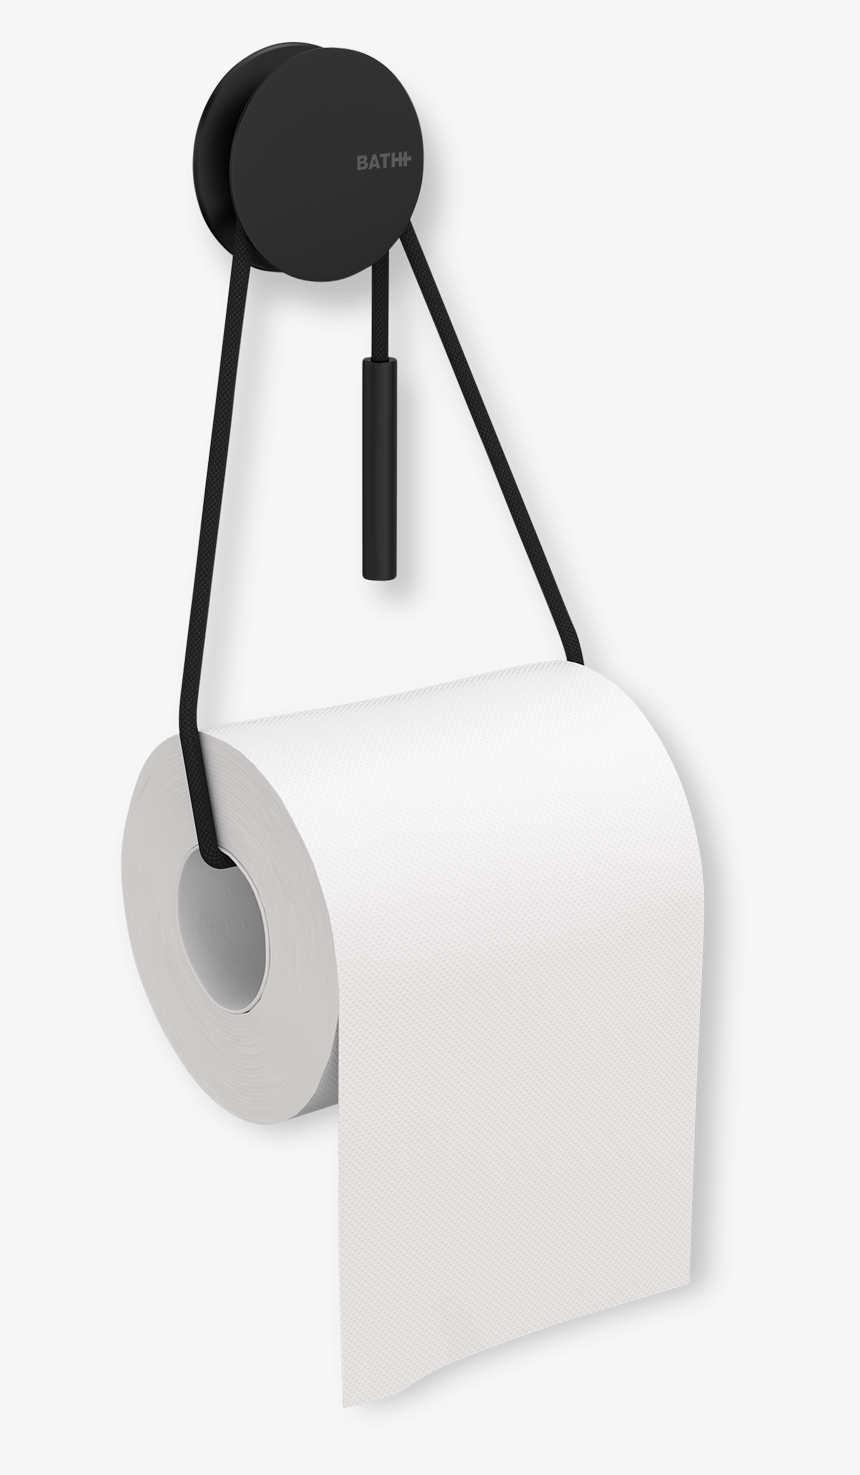 Diabolo Toilet Paper Holder, Black-0 - Toilet Paper Holder Png ...